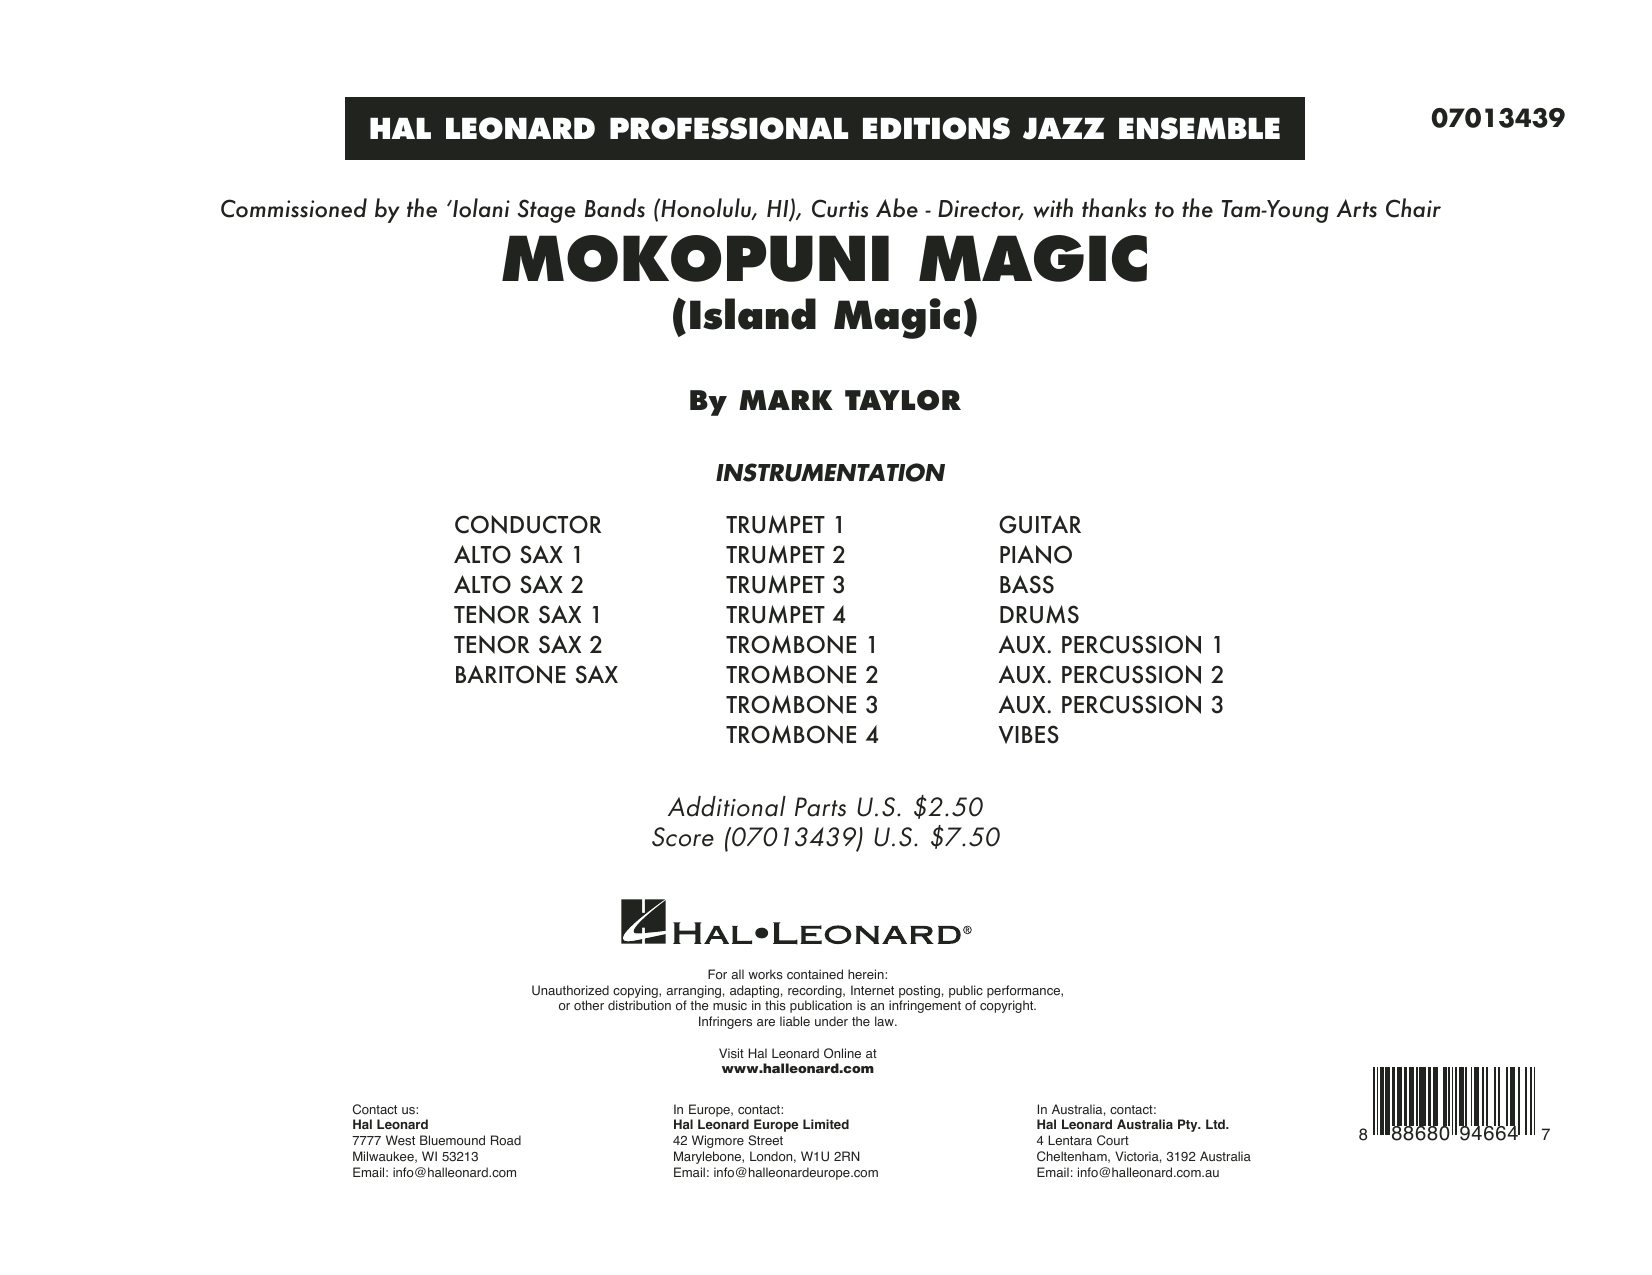 Mark Taylor Mokopuni Magic (Island Magic) - Conductor Score (Full Score) Sheet Music Notes & Chords for Jazz Ensemble - Download or Print PDF